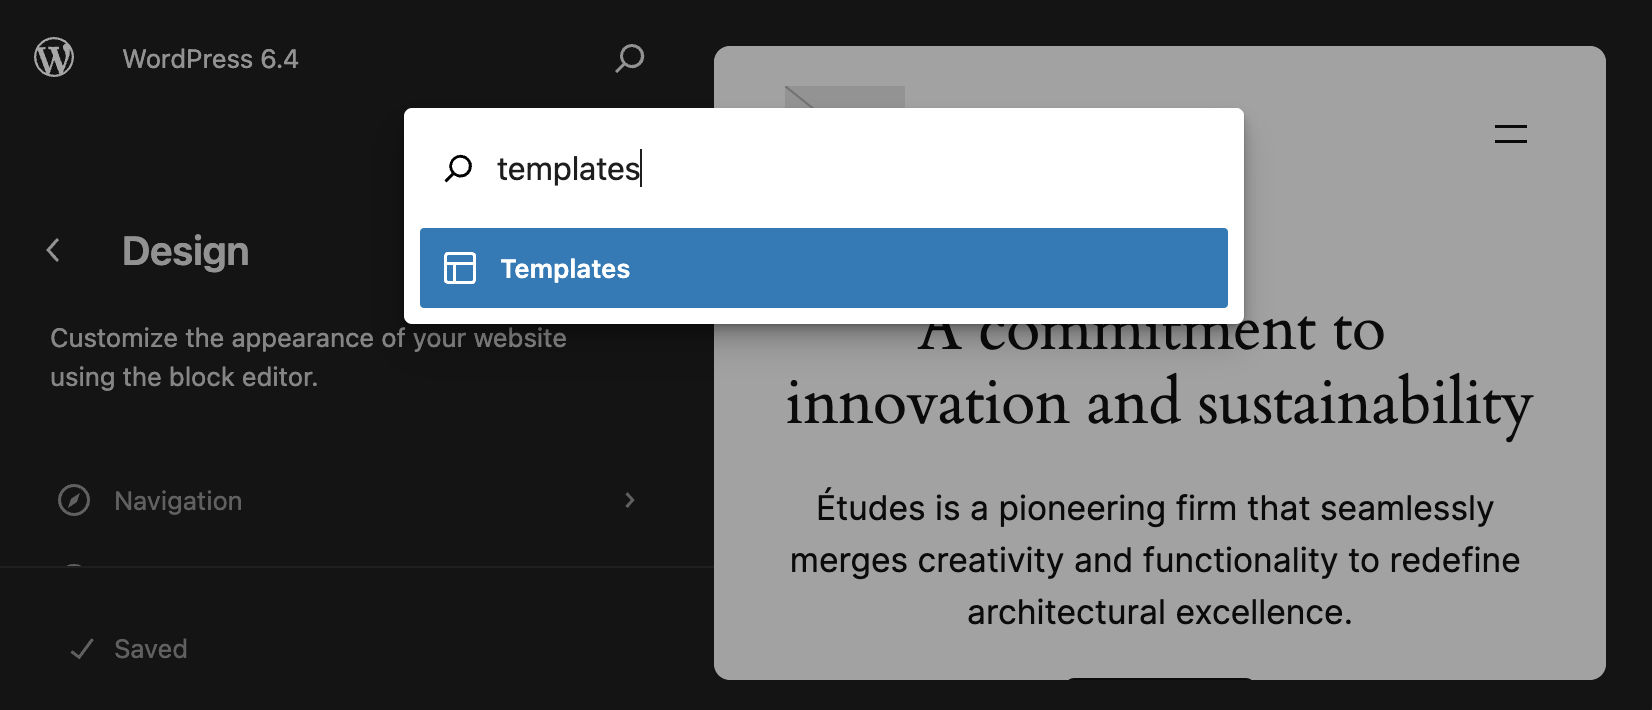 Launching templates in WordPress 6.4